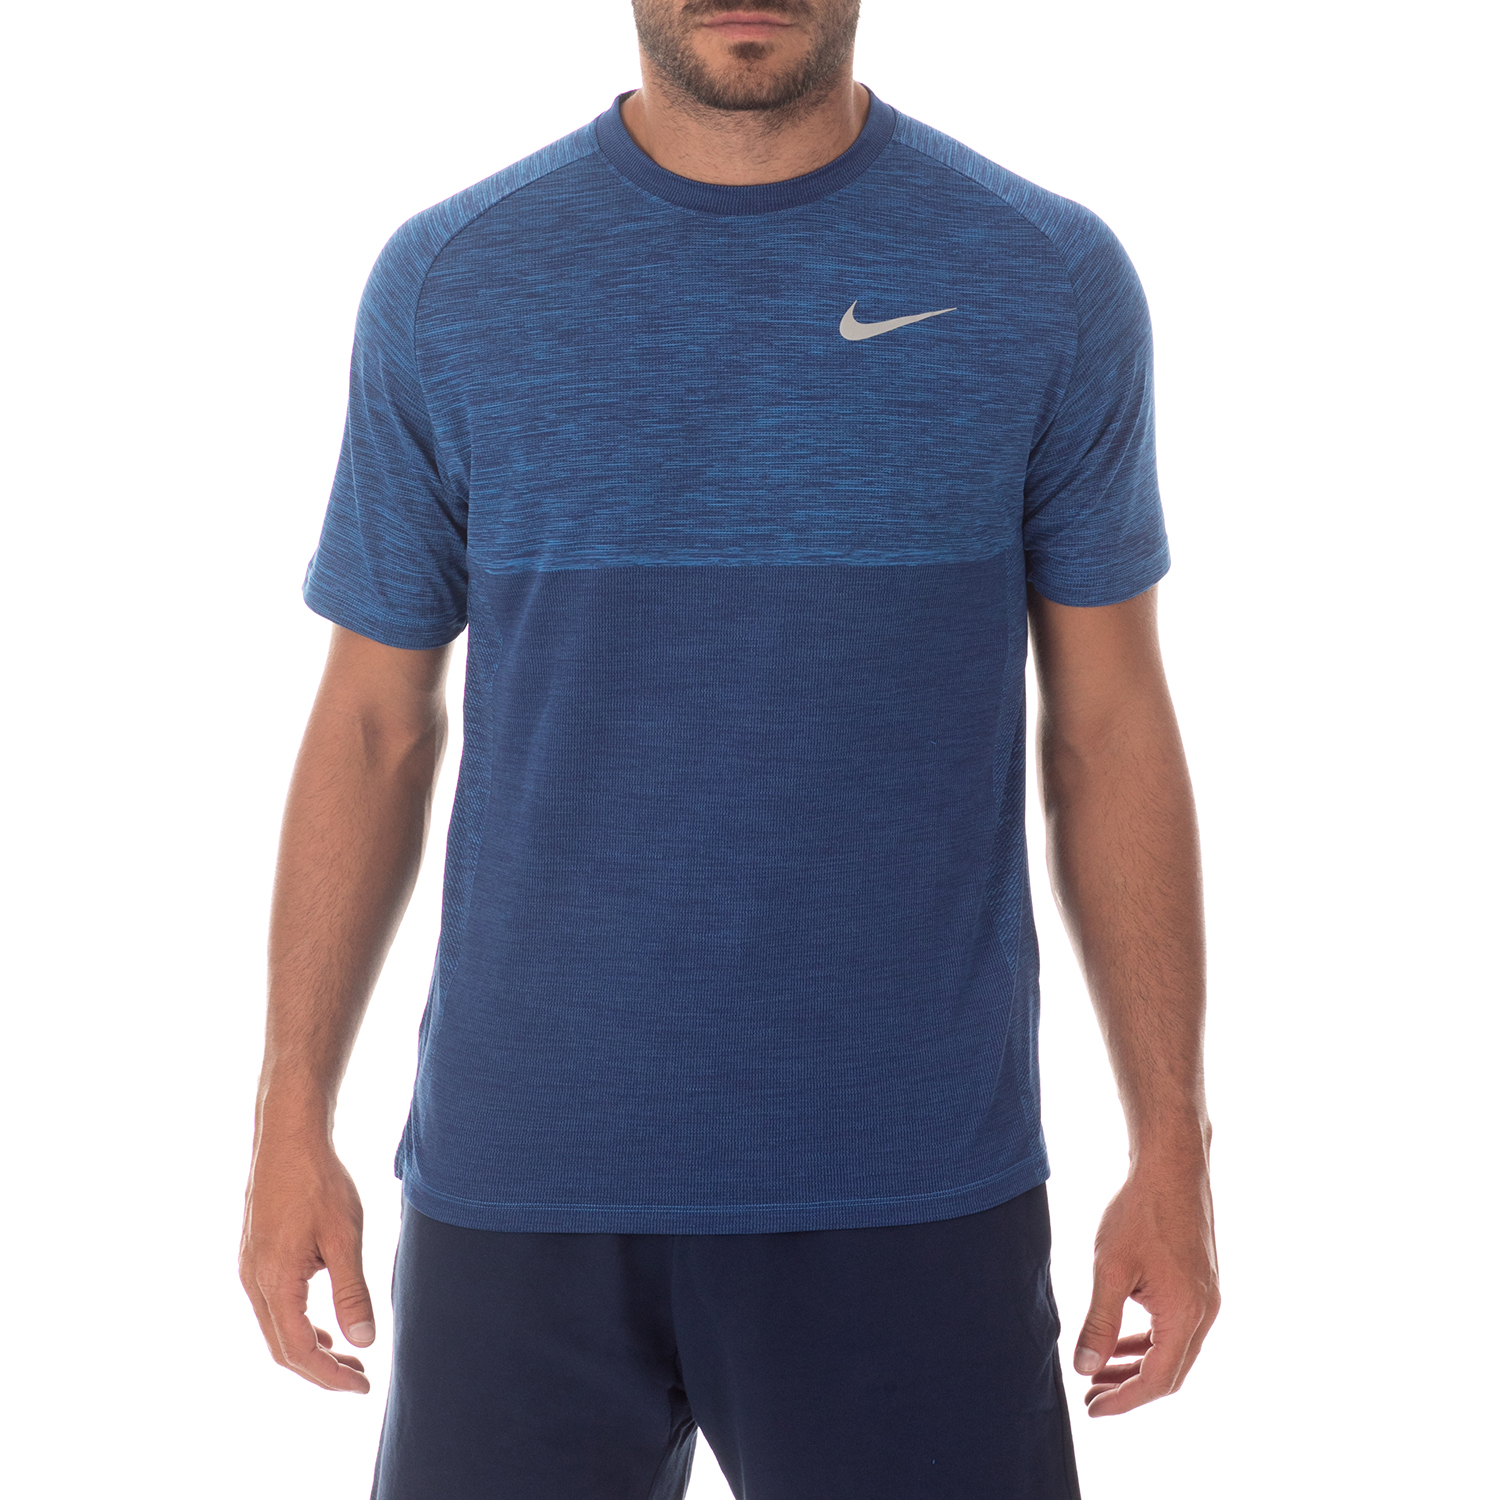 NIKE - Ανδρική κοντομάνικη μπλούζα NIKE DRY MEDALIST TOP μπλε Ανδρικά/Ρούχα/Αθλητικά/T-shirt